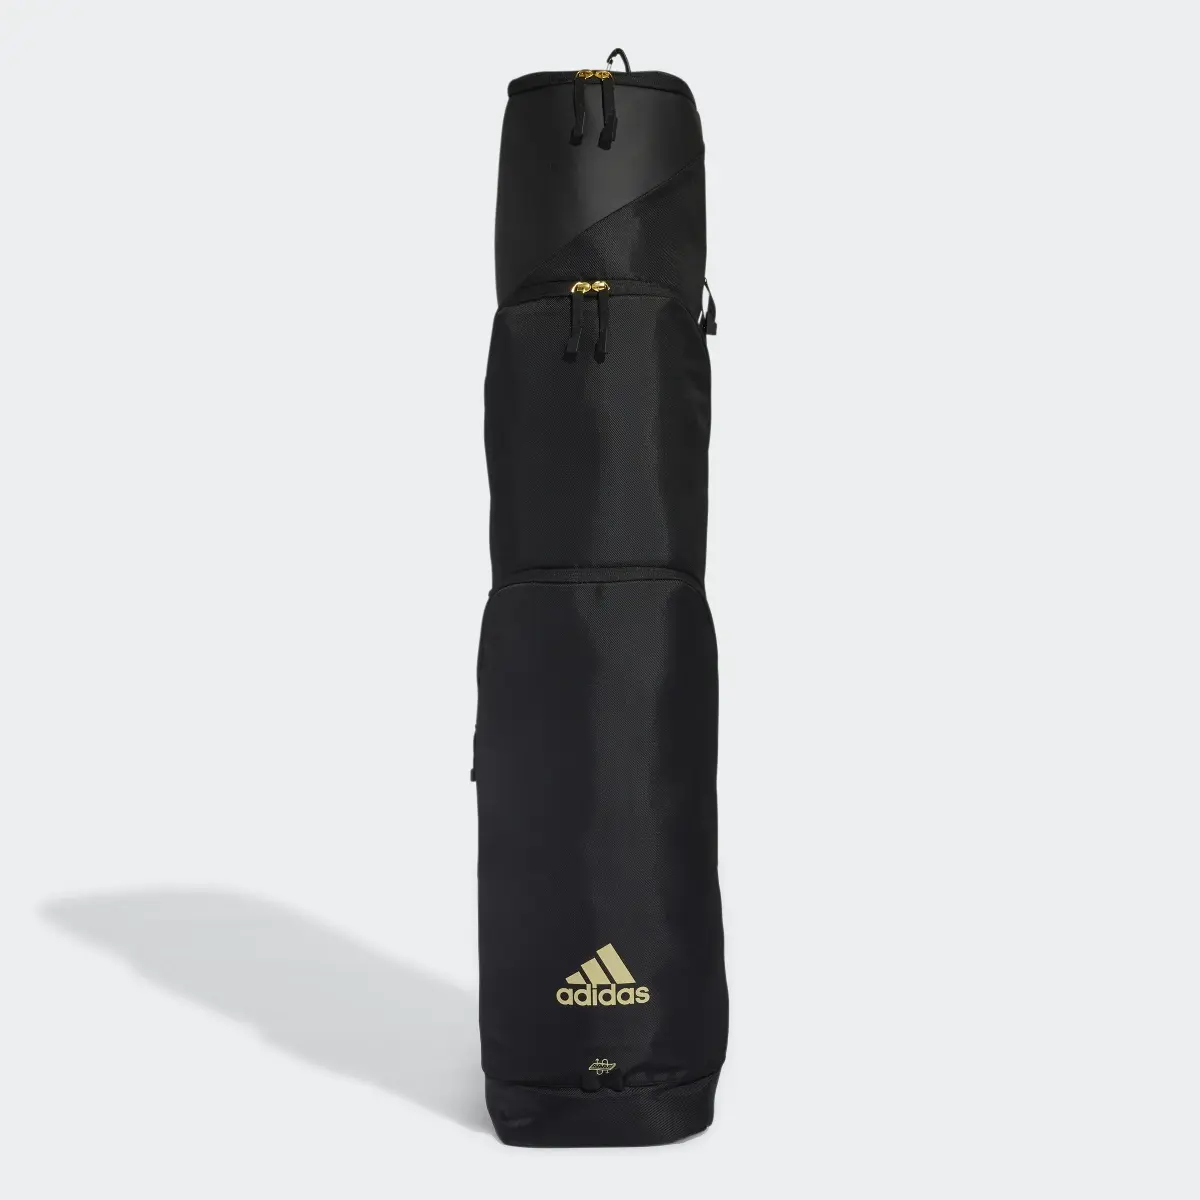 Adidas VS.6 Black/Gold Hockey Stick Bag. 1